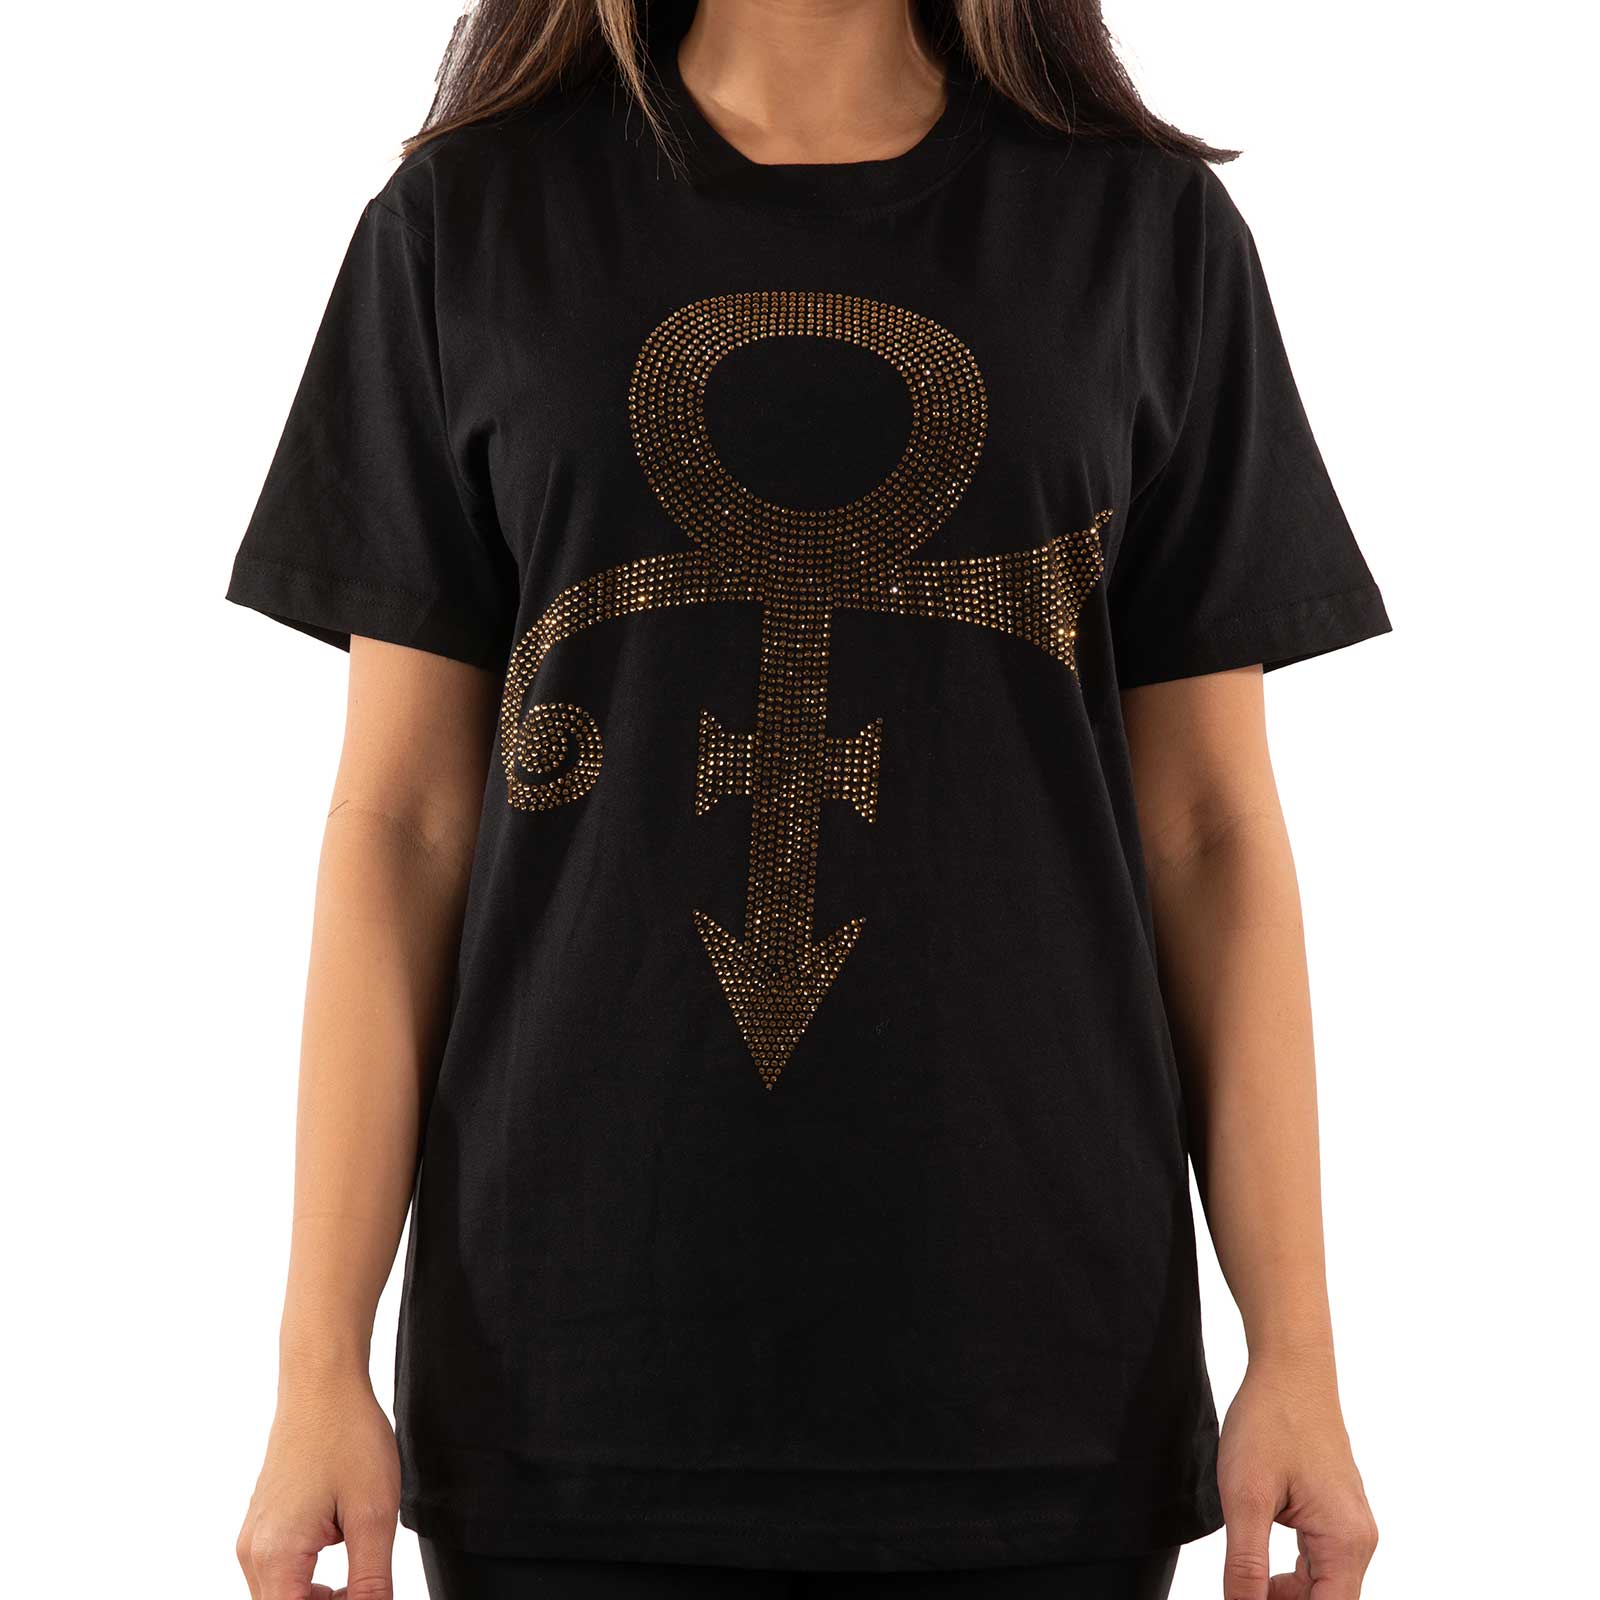 Prince T-Shirt - Gold Symbol (Diamante) - Unisex Official Licensed Design